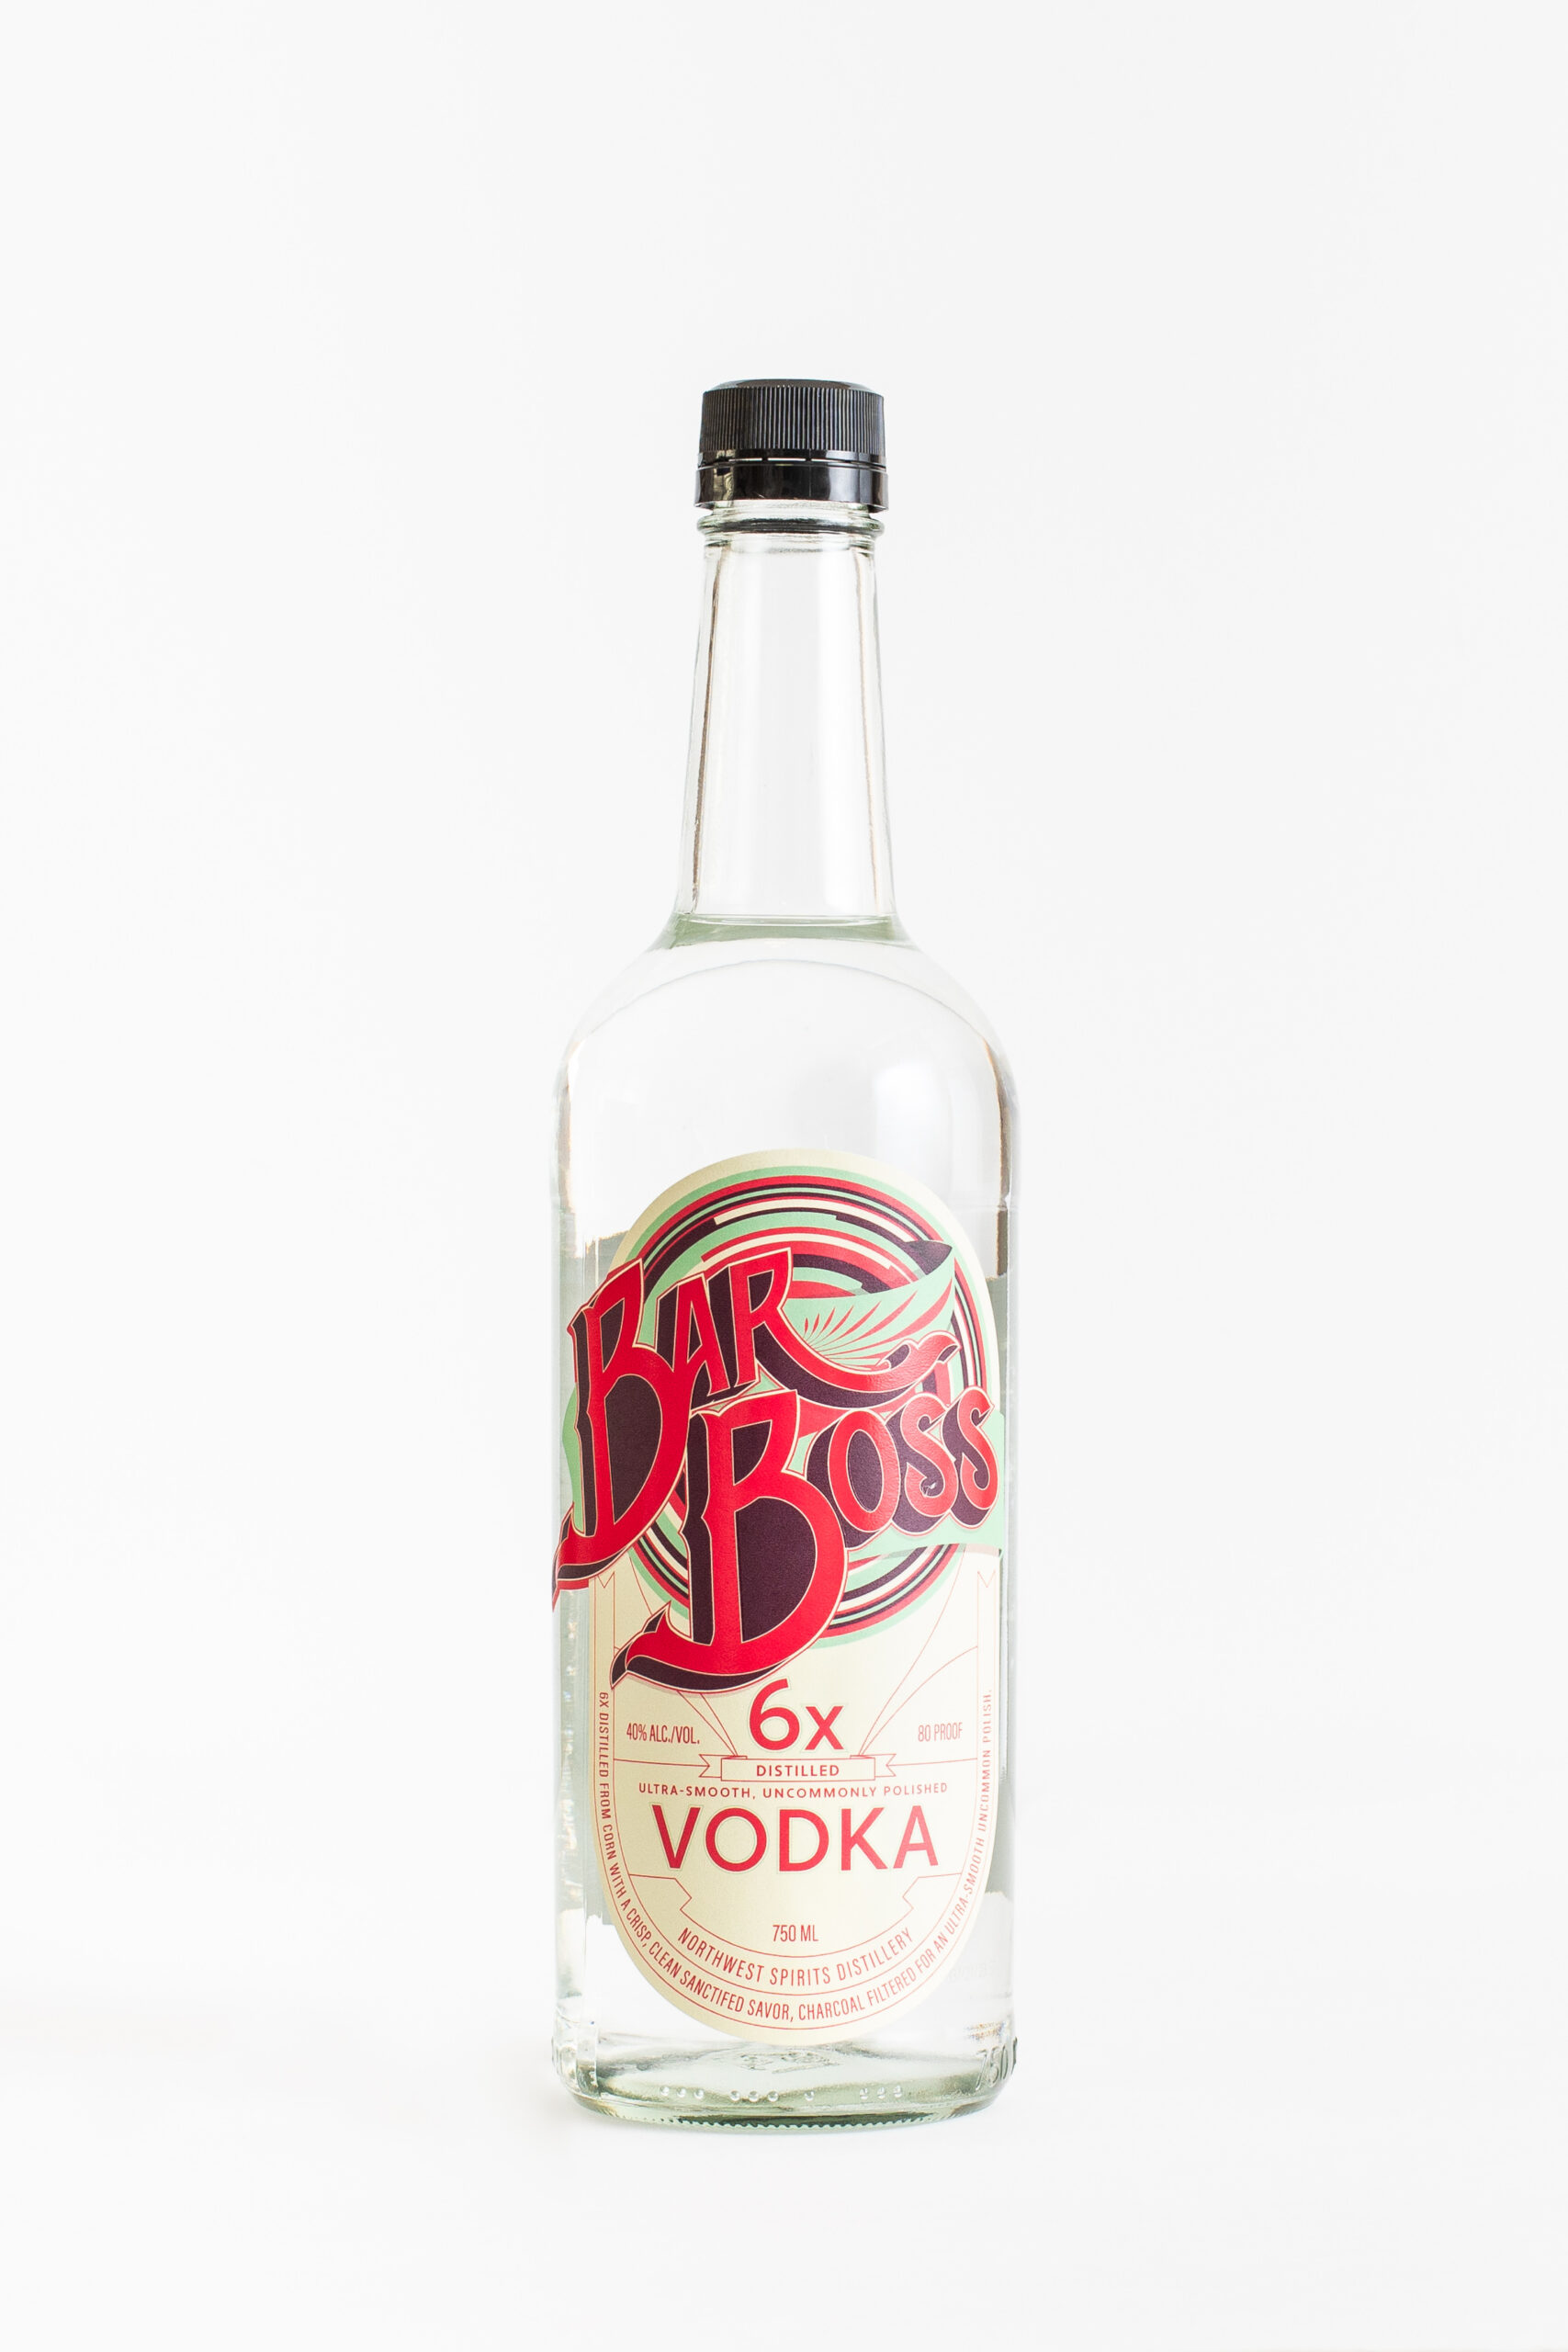 A bottle of Bar Boss Vodka sits on a clean white backdrop